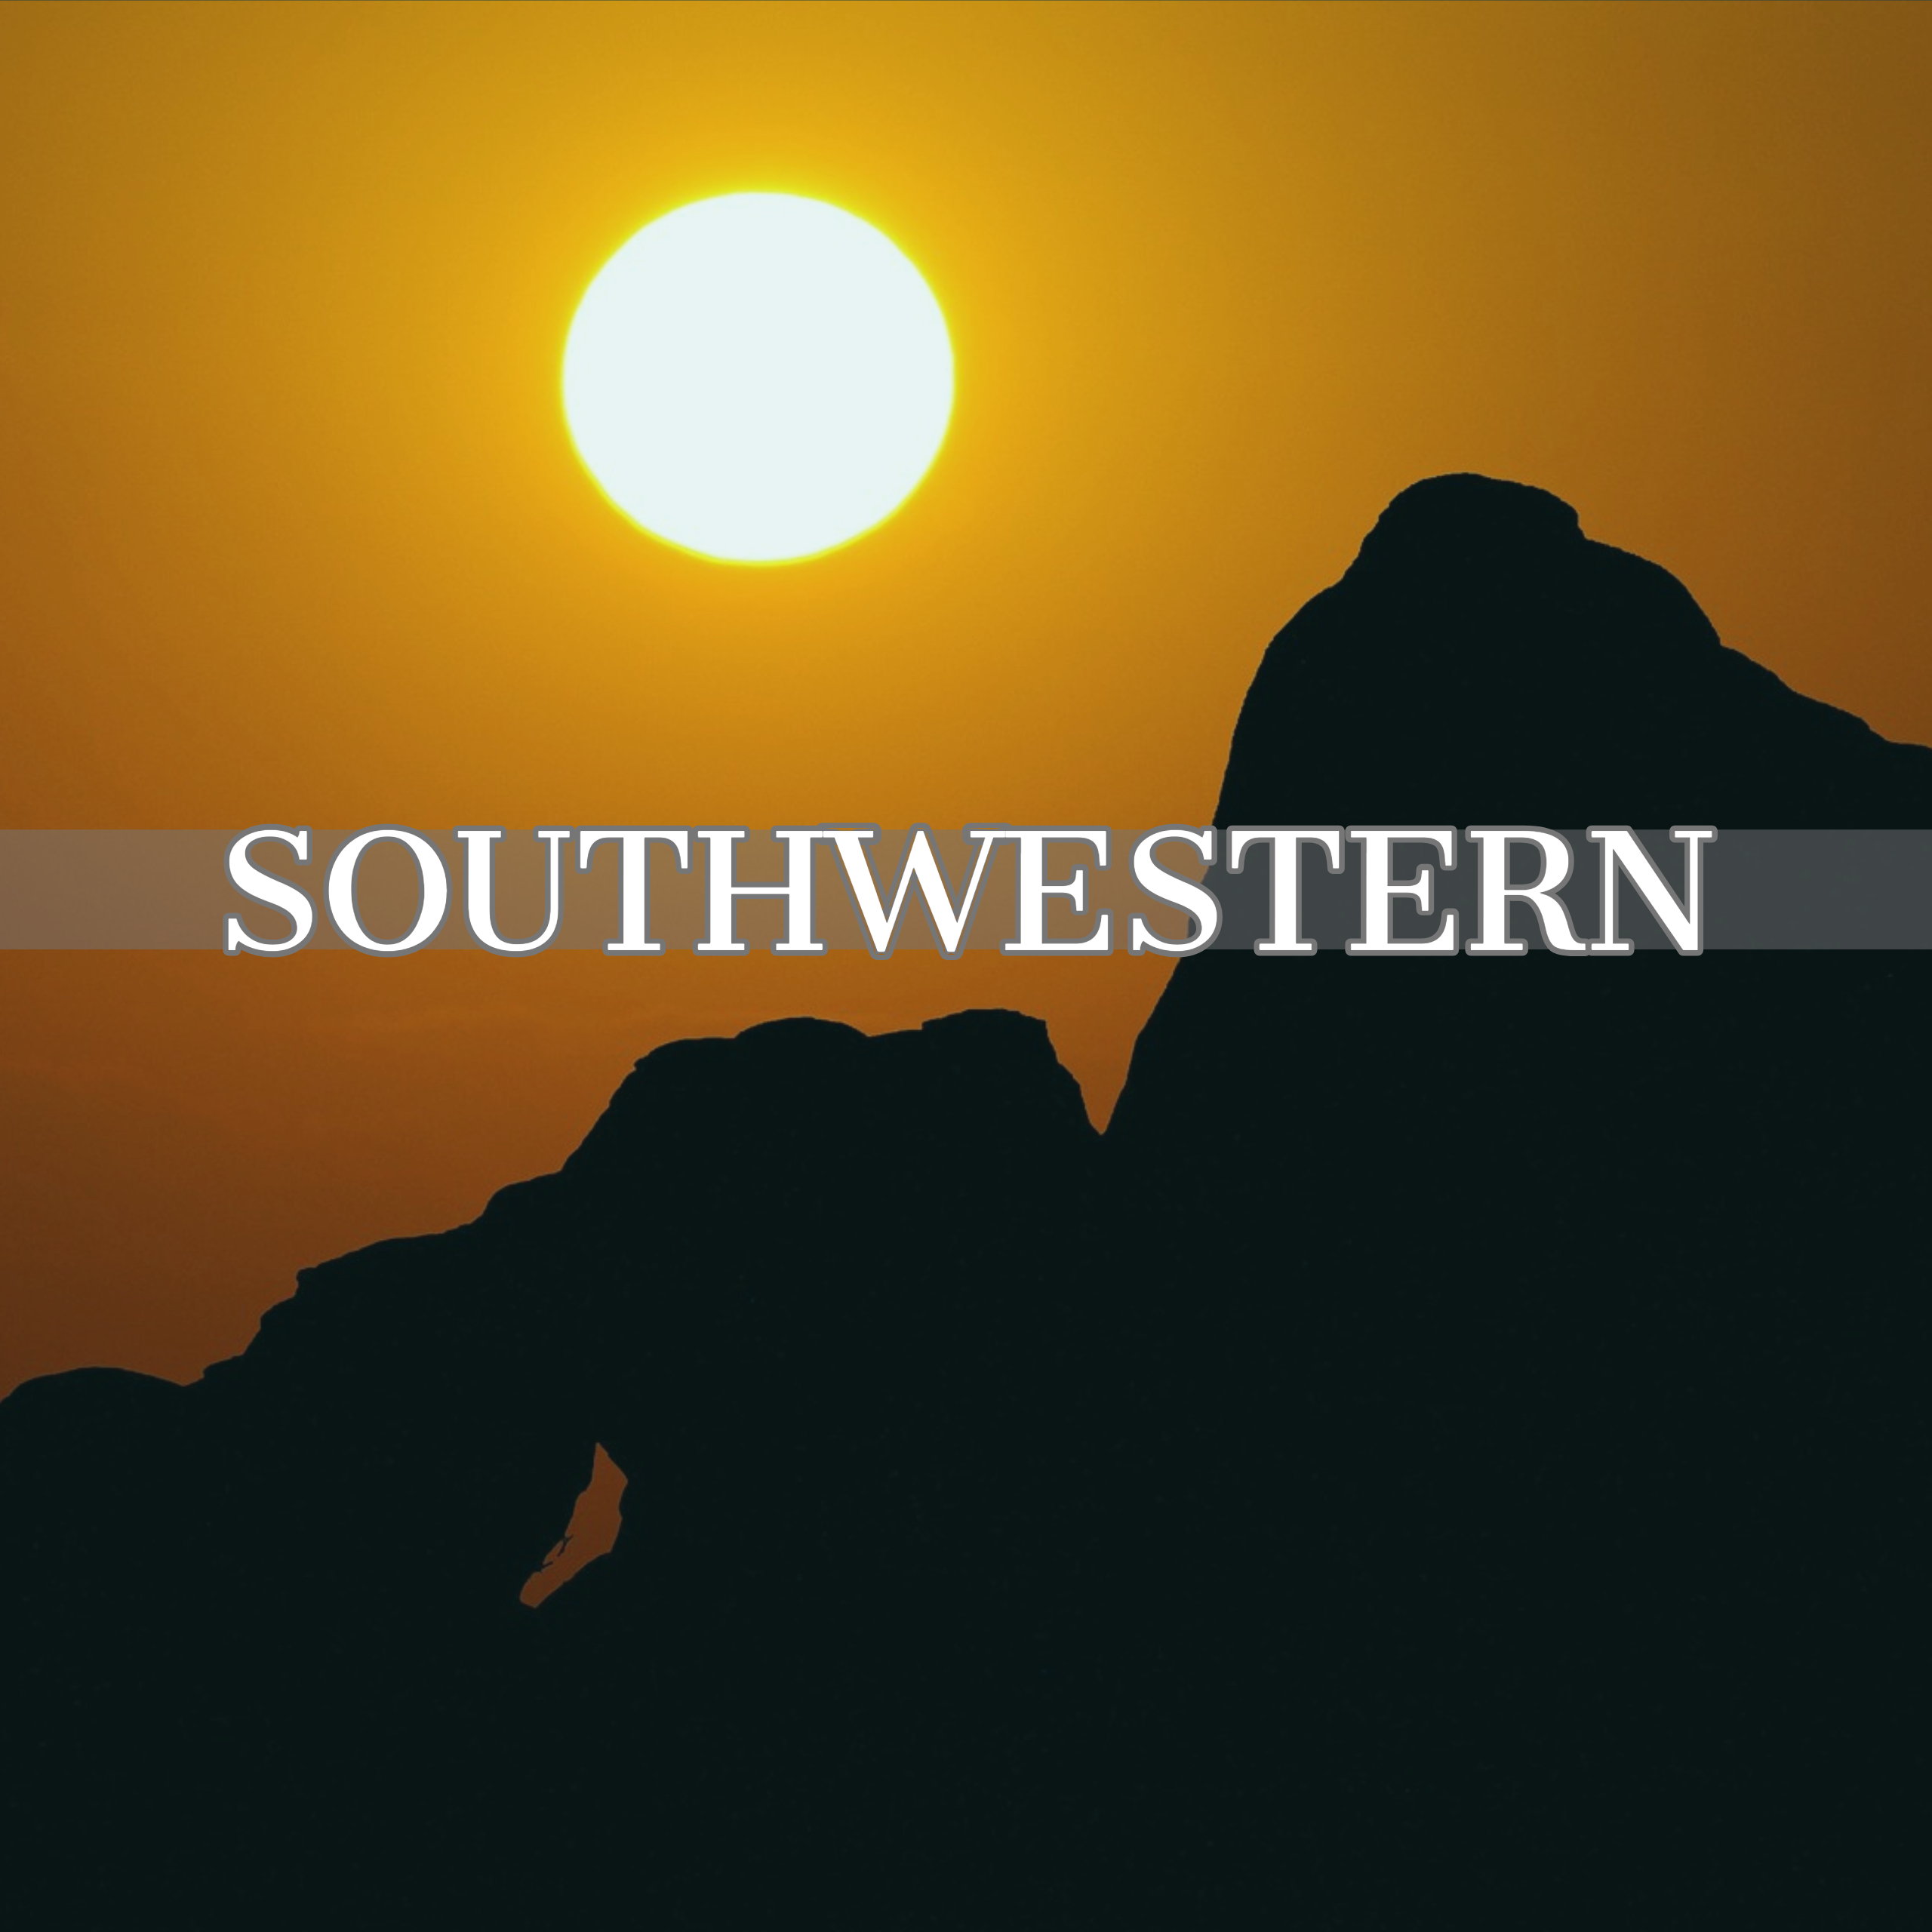 Southwestern Decor